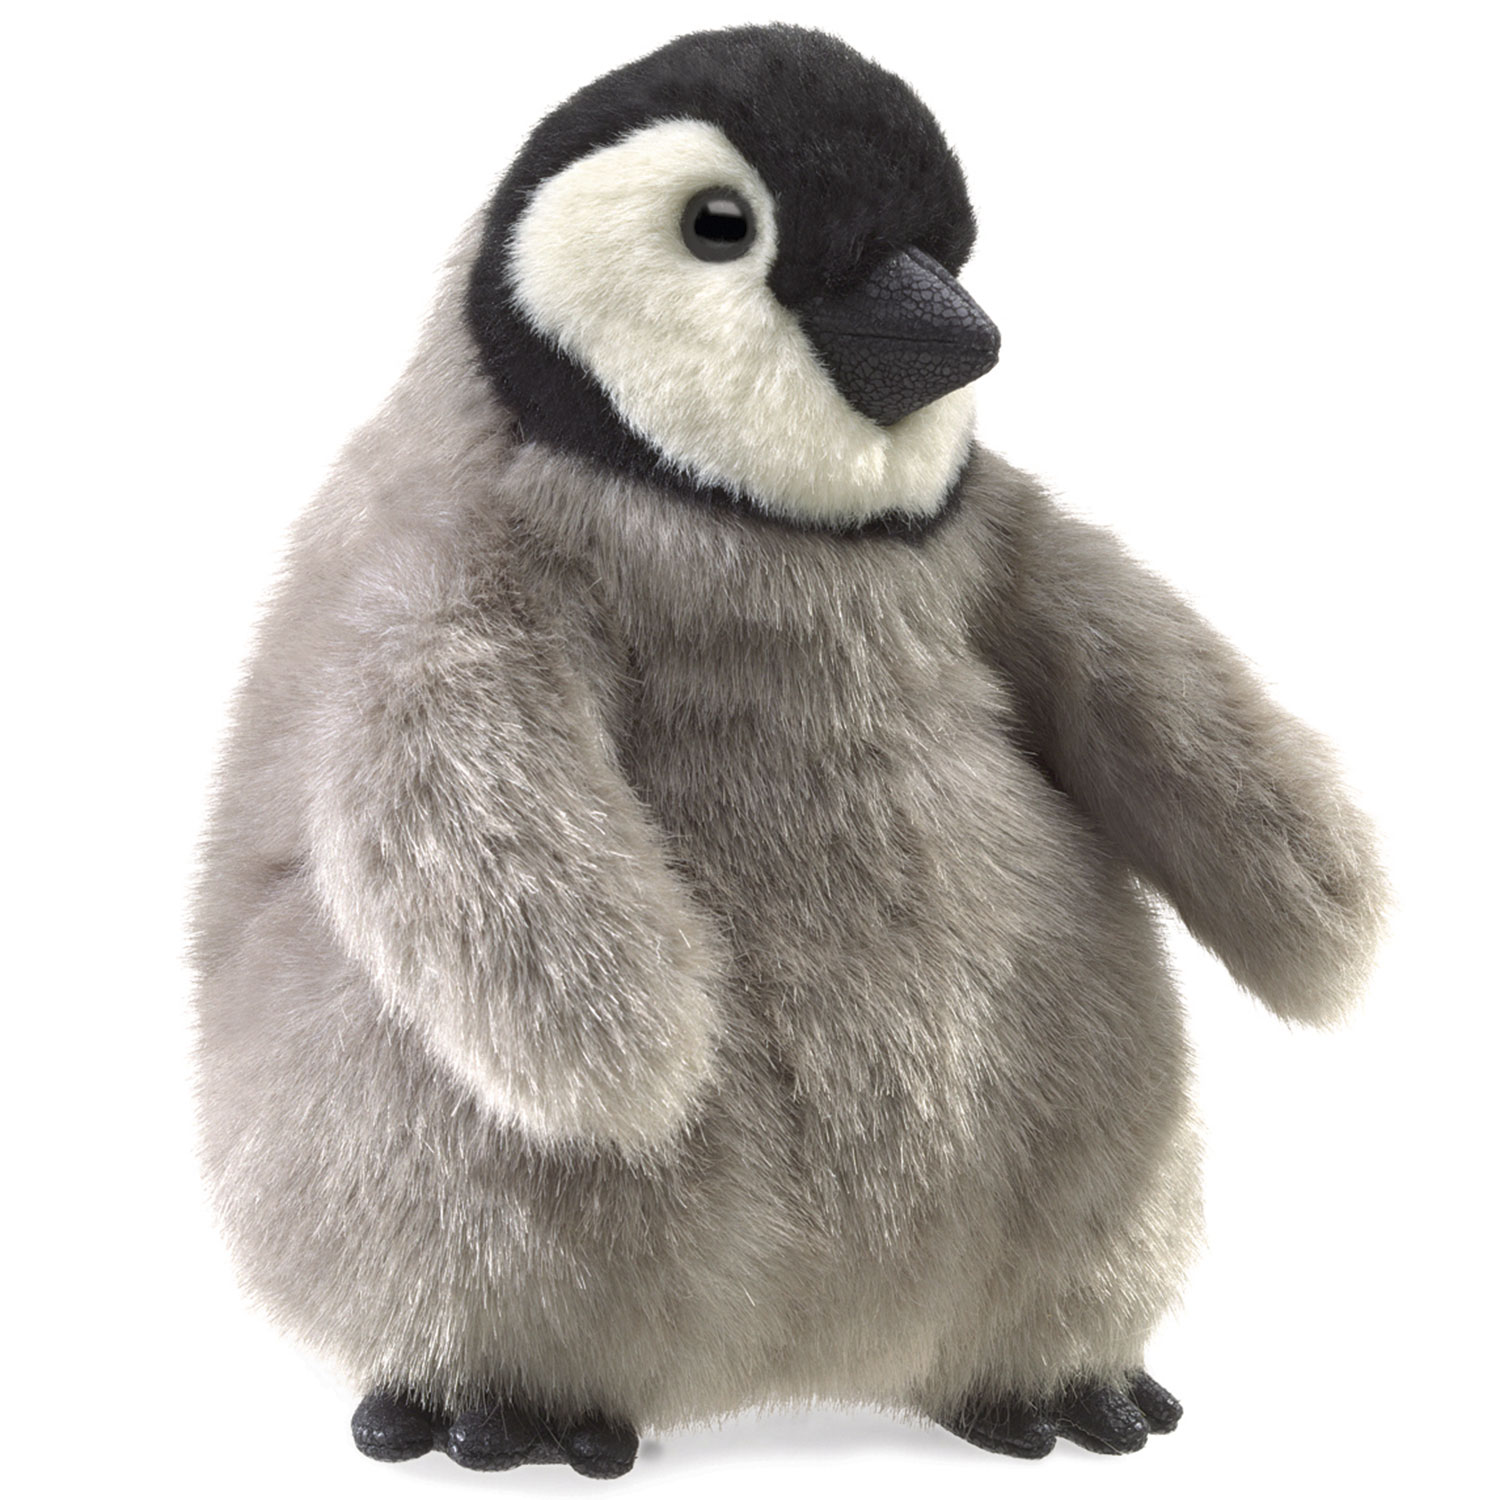 Baby Kaiserpinguin / Baby Emperor Penguin